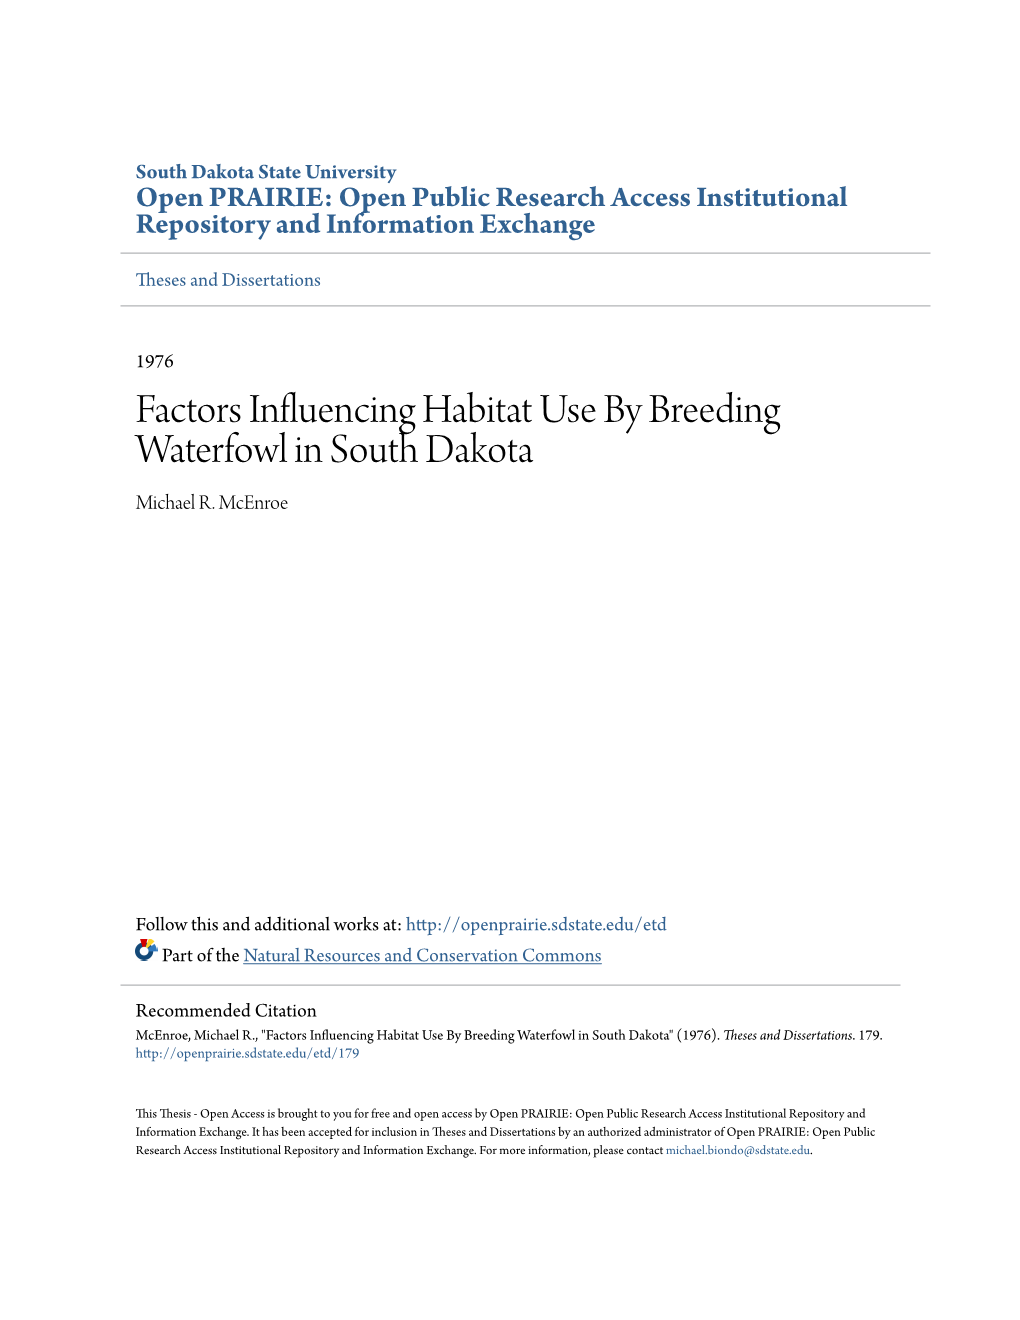 Factors Influencing Habitat Use by Breeding Waterfowl in South Dakota Michael R